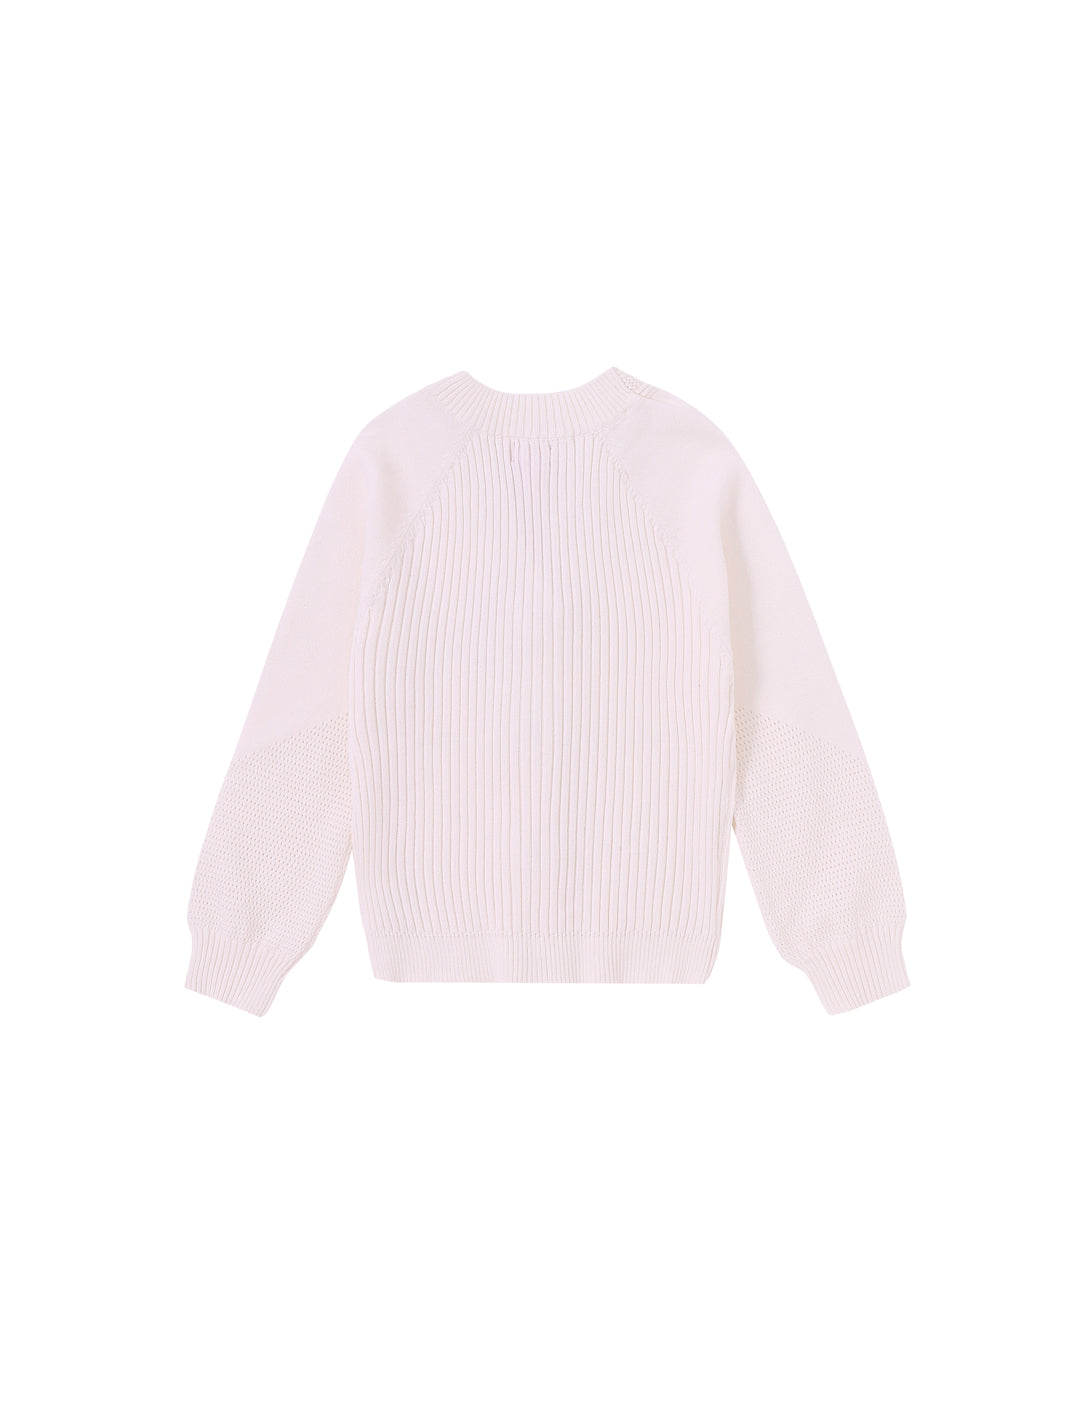 Eyelet Cardigan Sweater - Cream White